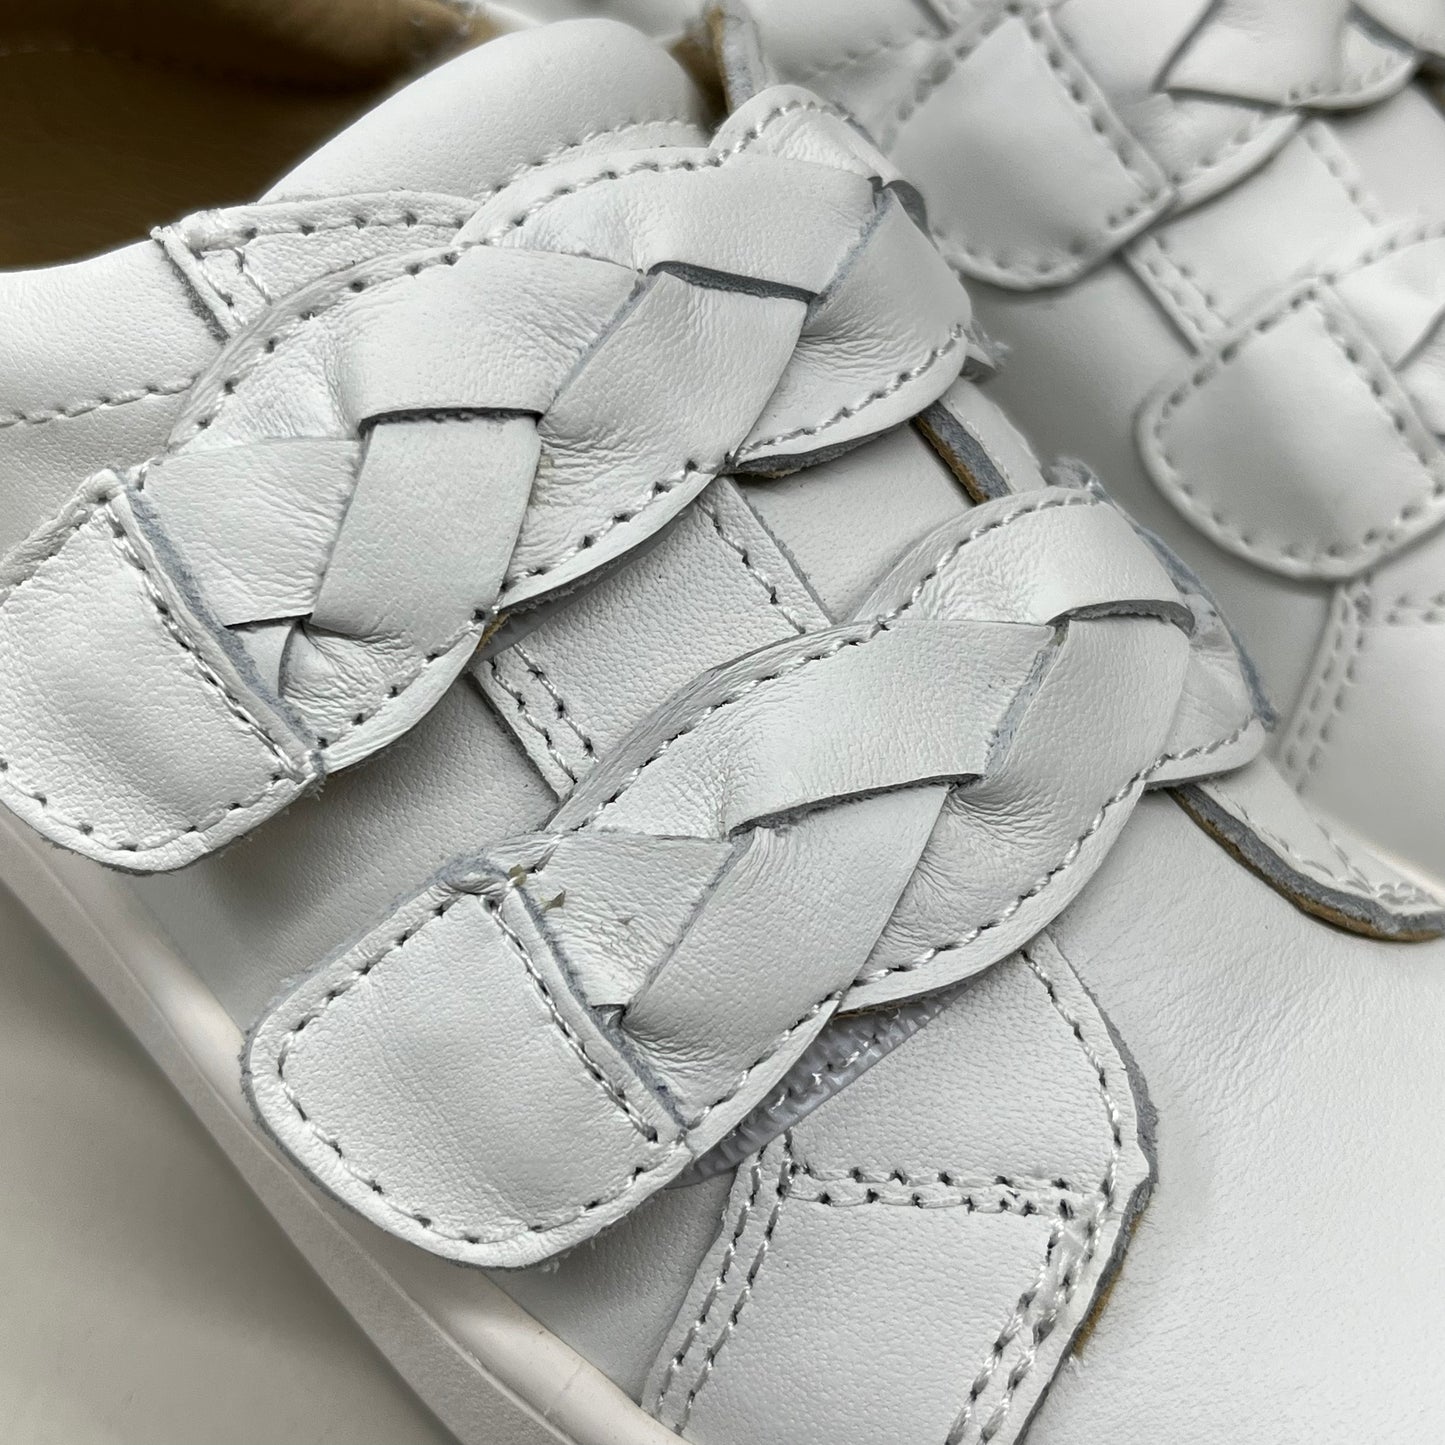 OLD SOLES Baby Plats Leather Shoe Sz 7 EU 23 Snow / Silver #6134